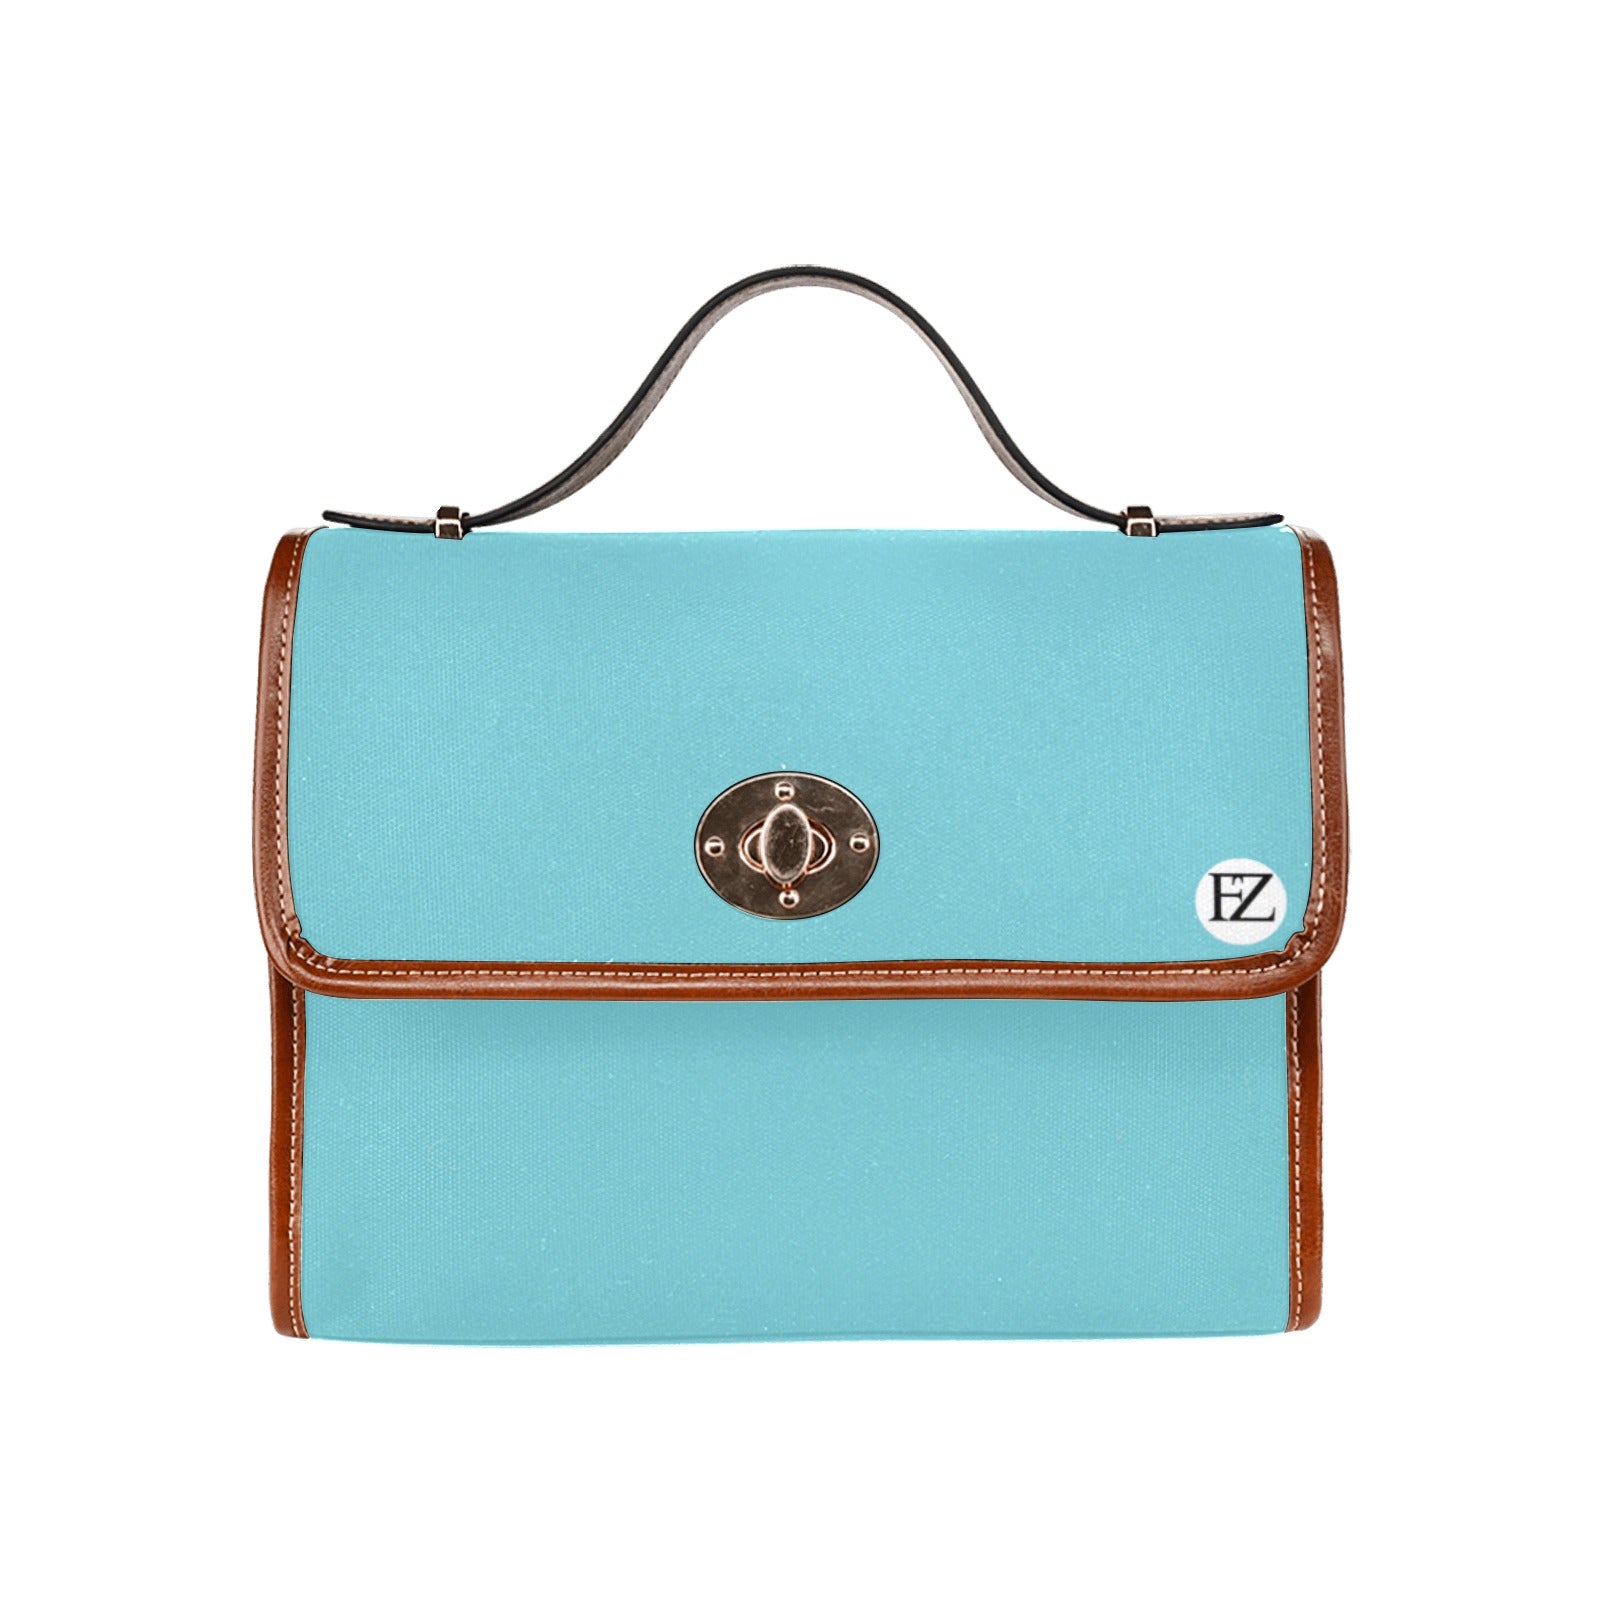 fz original handbag one size / fz - fuchsia all over print waterproof canvas bag(model1641)(brown strap)